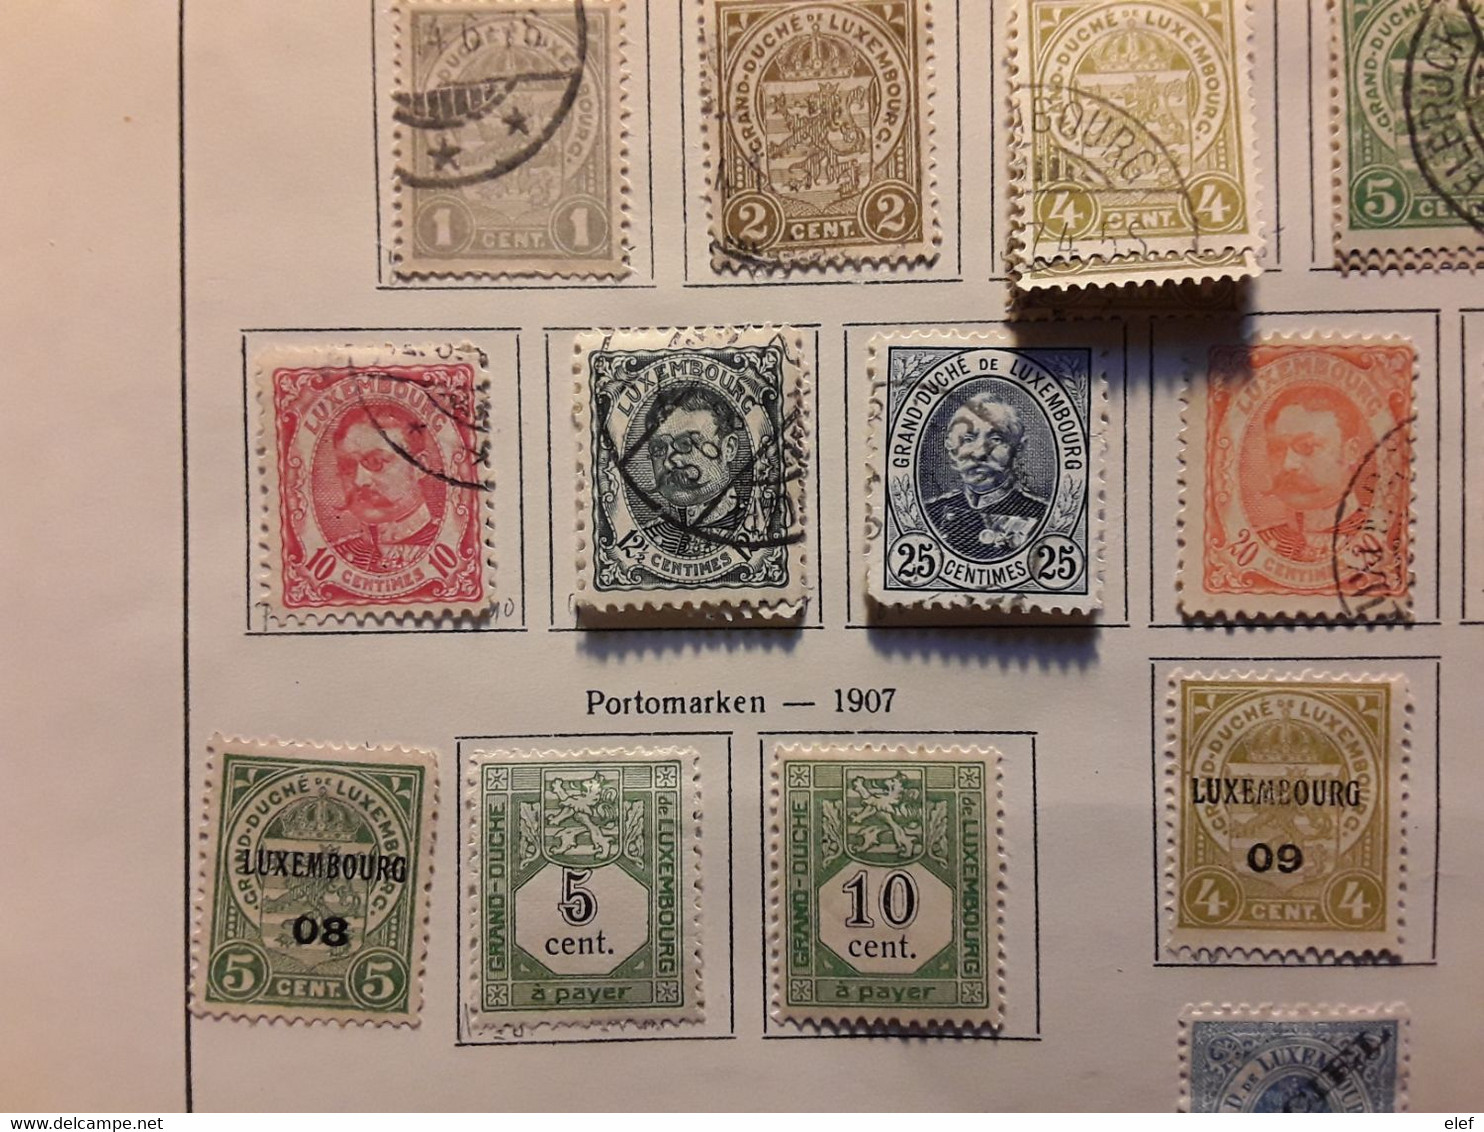 LUXEMBOURG 1859 - 1907 Collection 56 timbres neufs et obl dont taxe,service sur page Album ancienne,  TB cote 80 euros